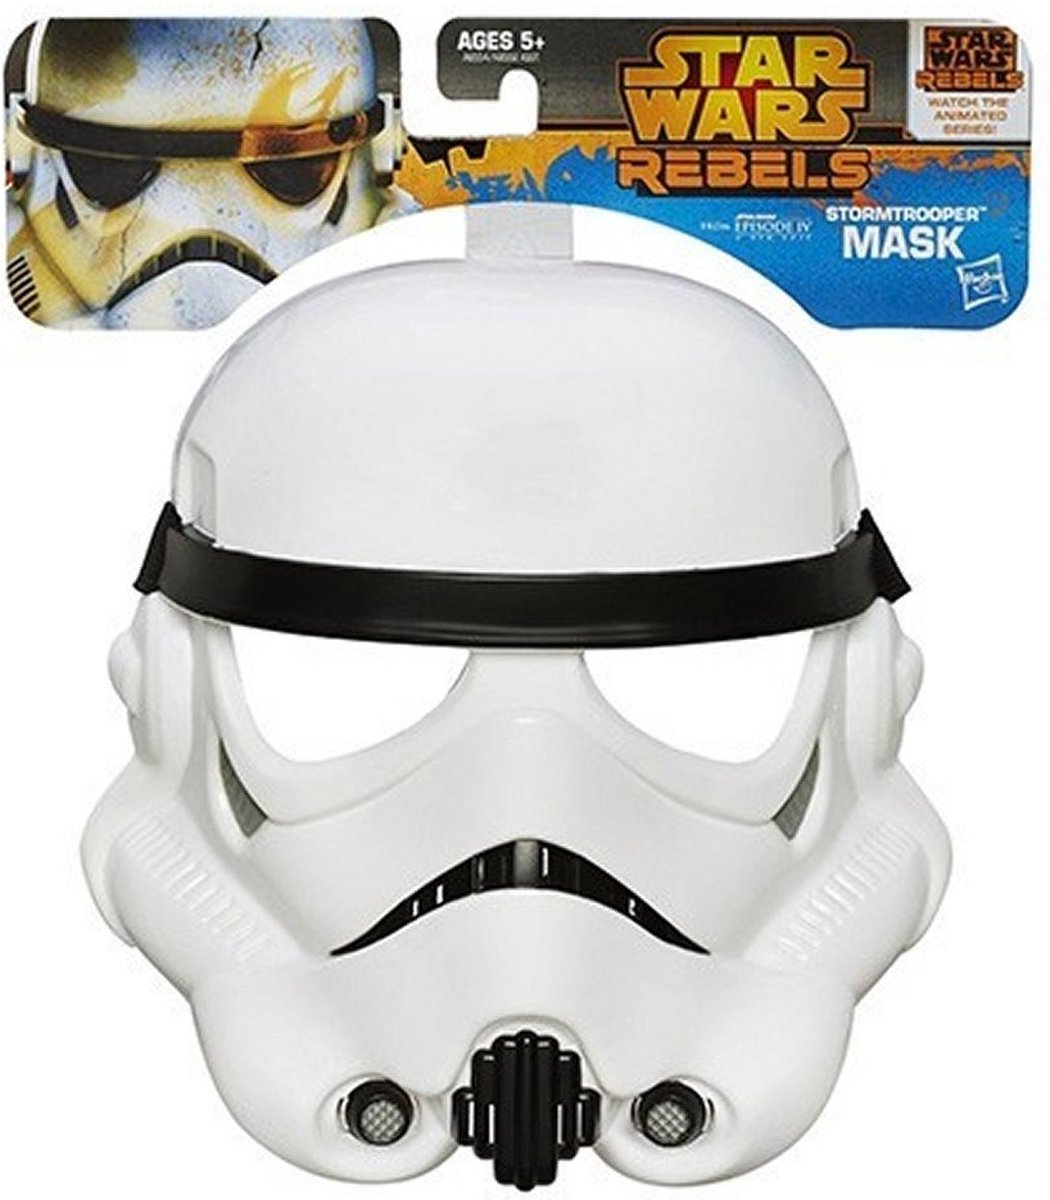 Hasbro Star Wars Rebels Masker Assorti